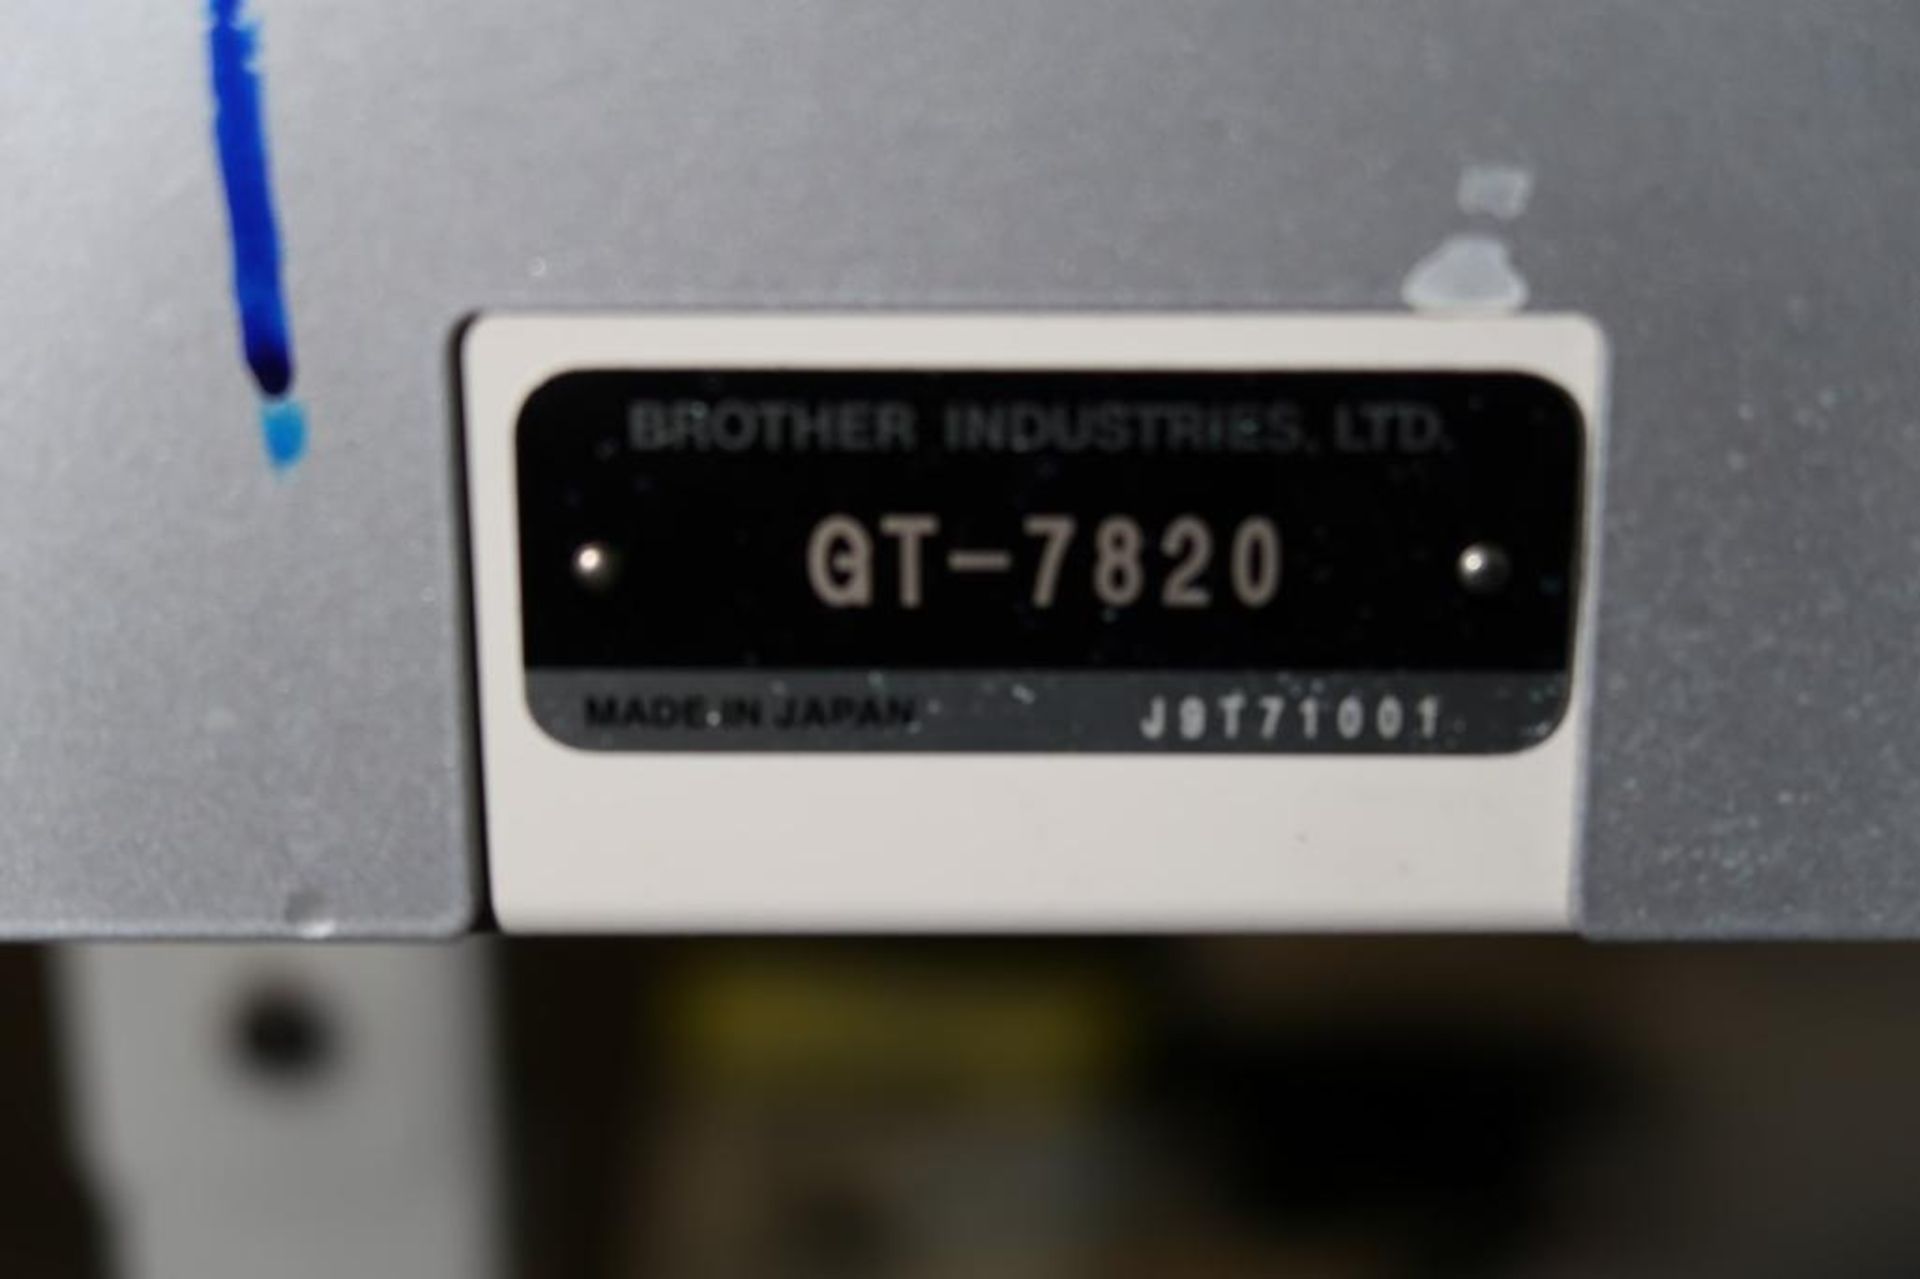 Brother GT-3 Series mdl. GT-7820 Digital Garment Printer - Image 7 of 7